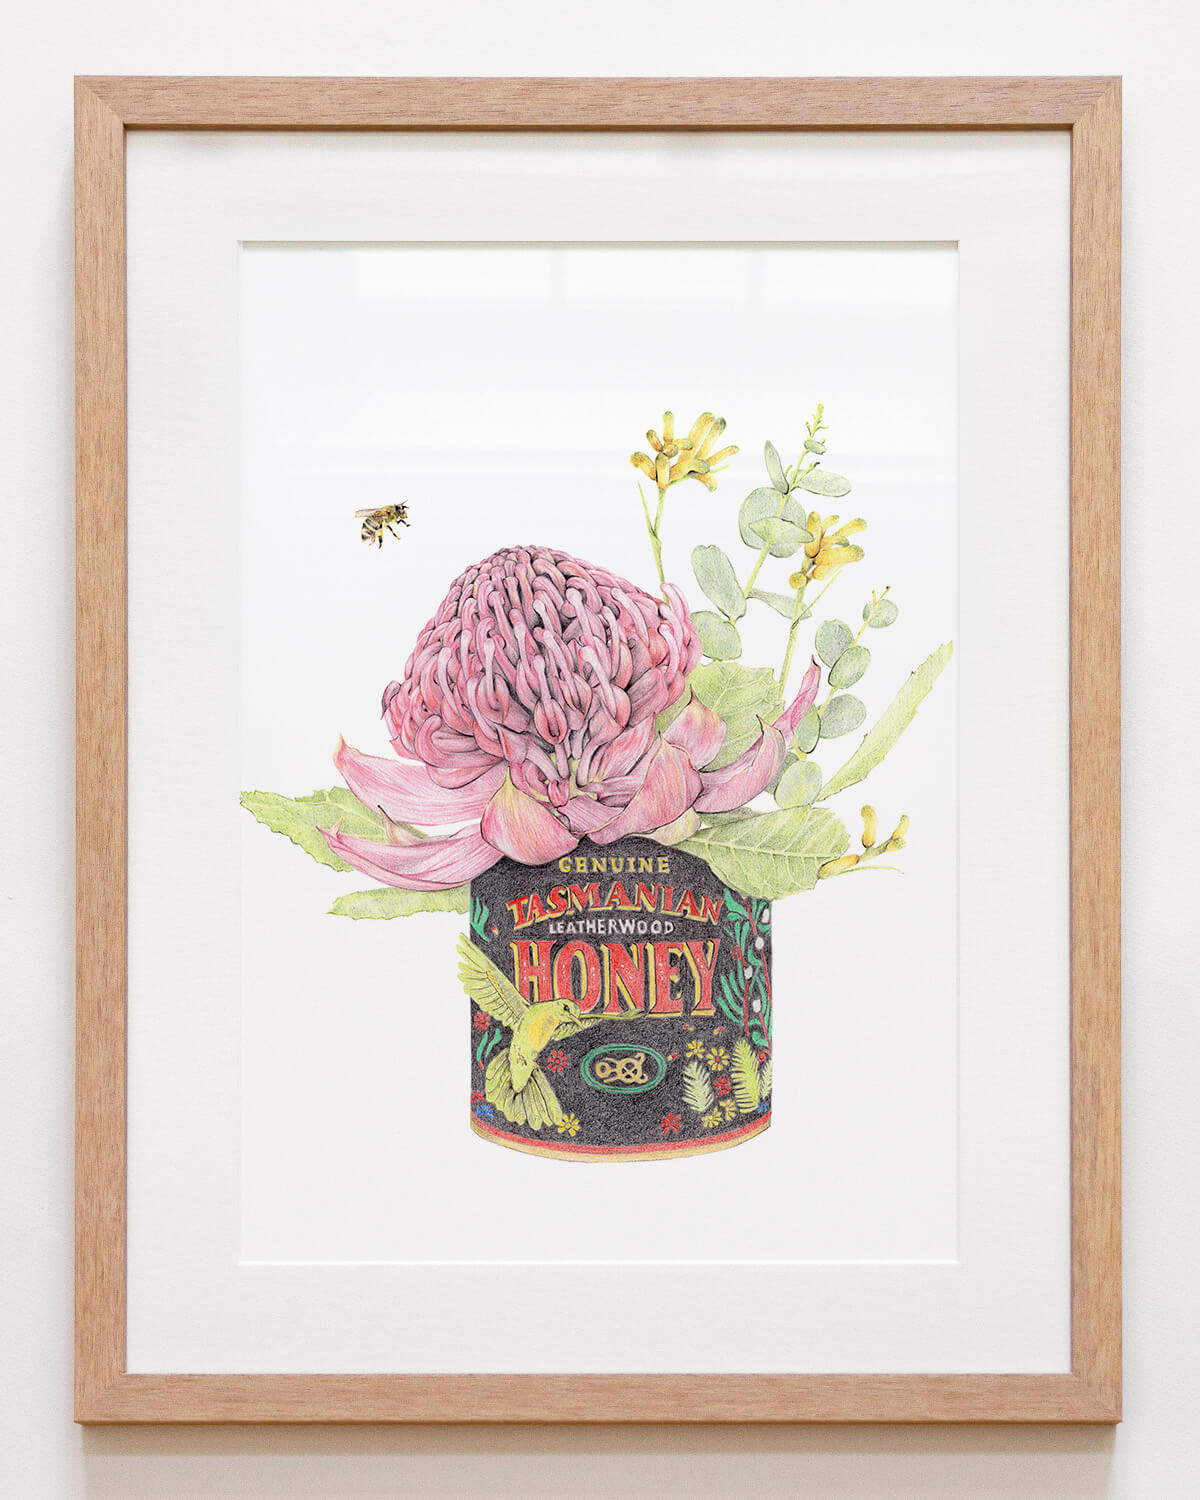 Australian framed wall art print featuring Tasmania honey and florals